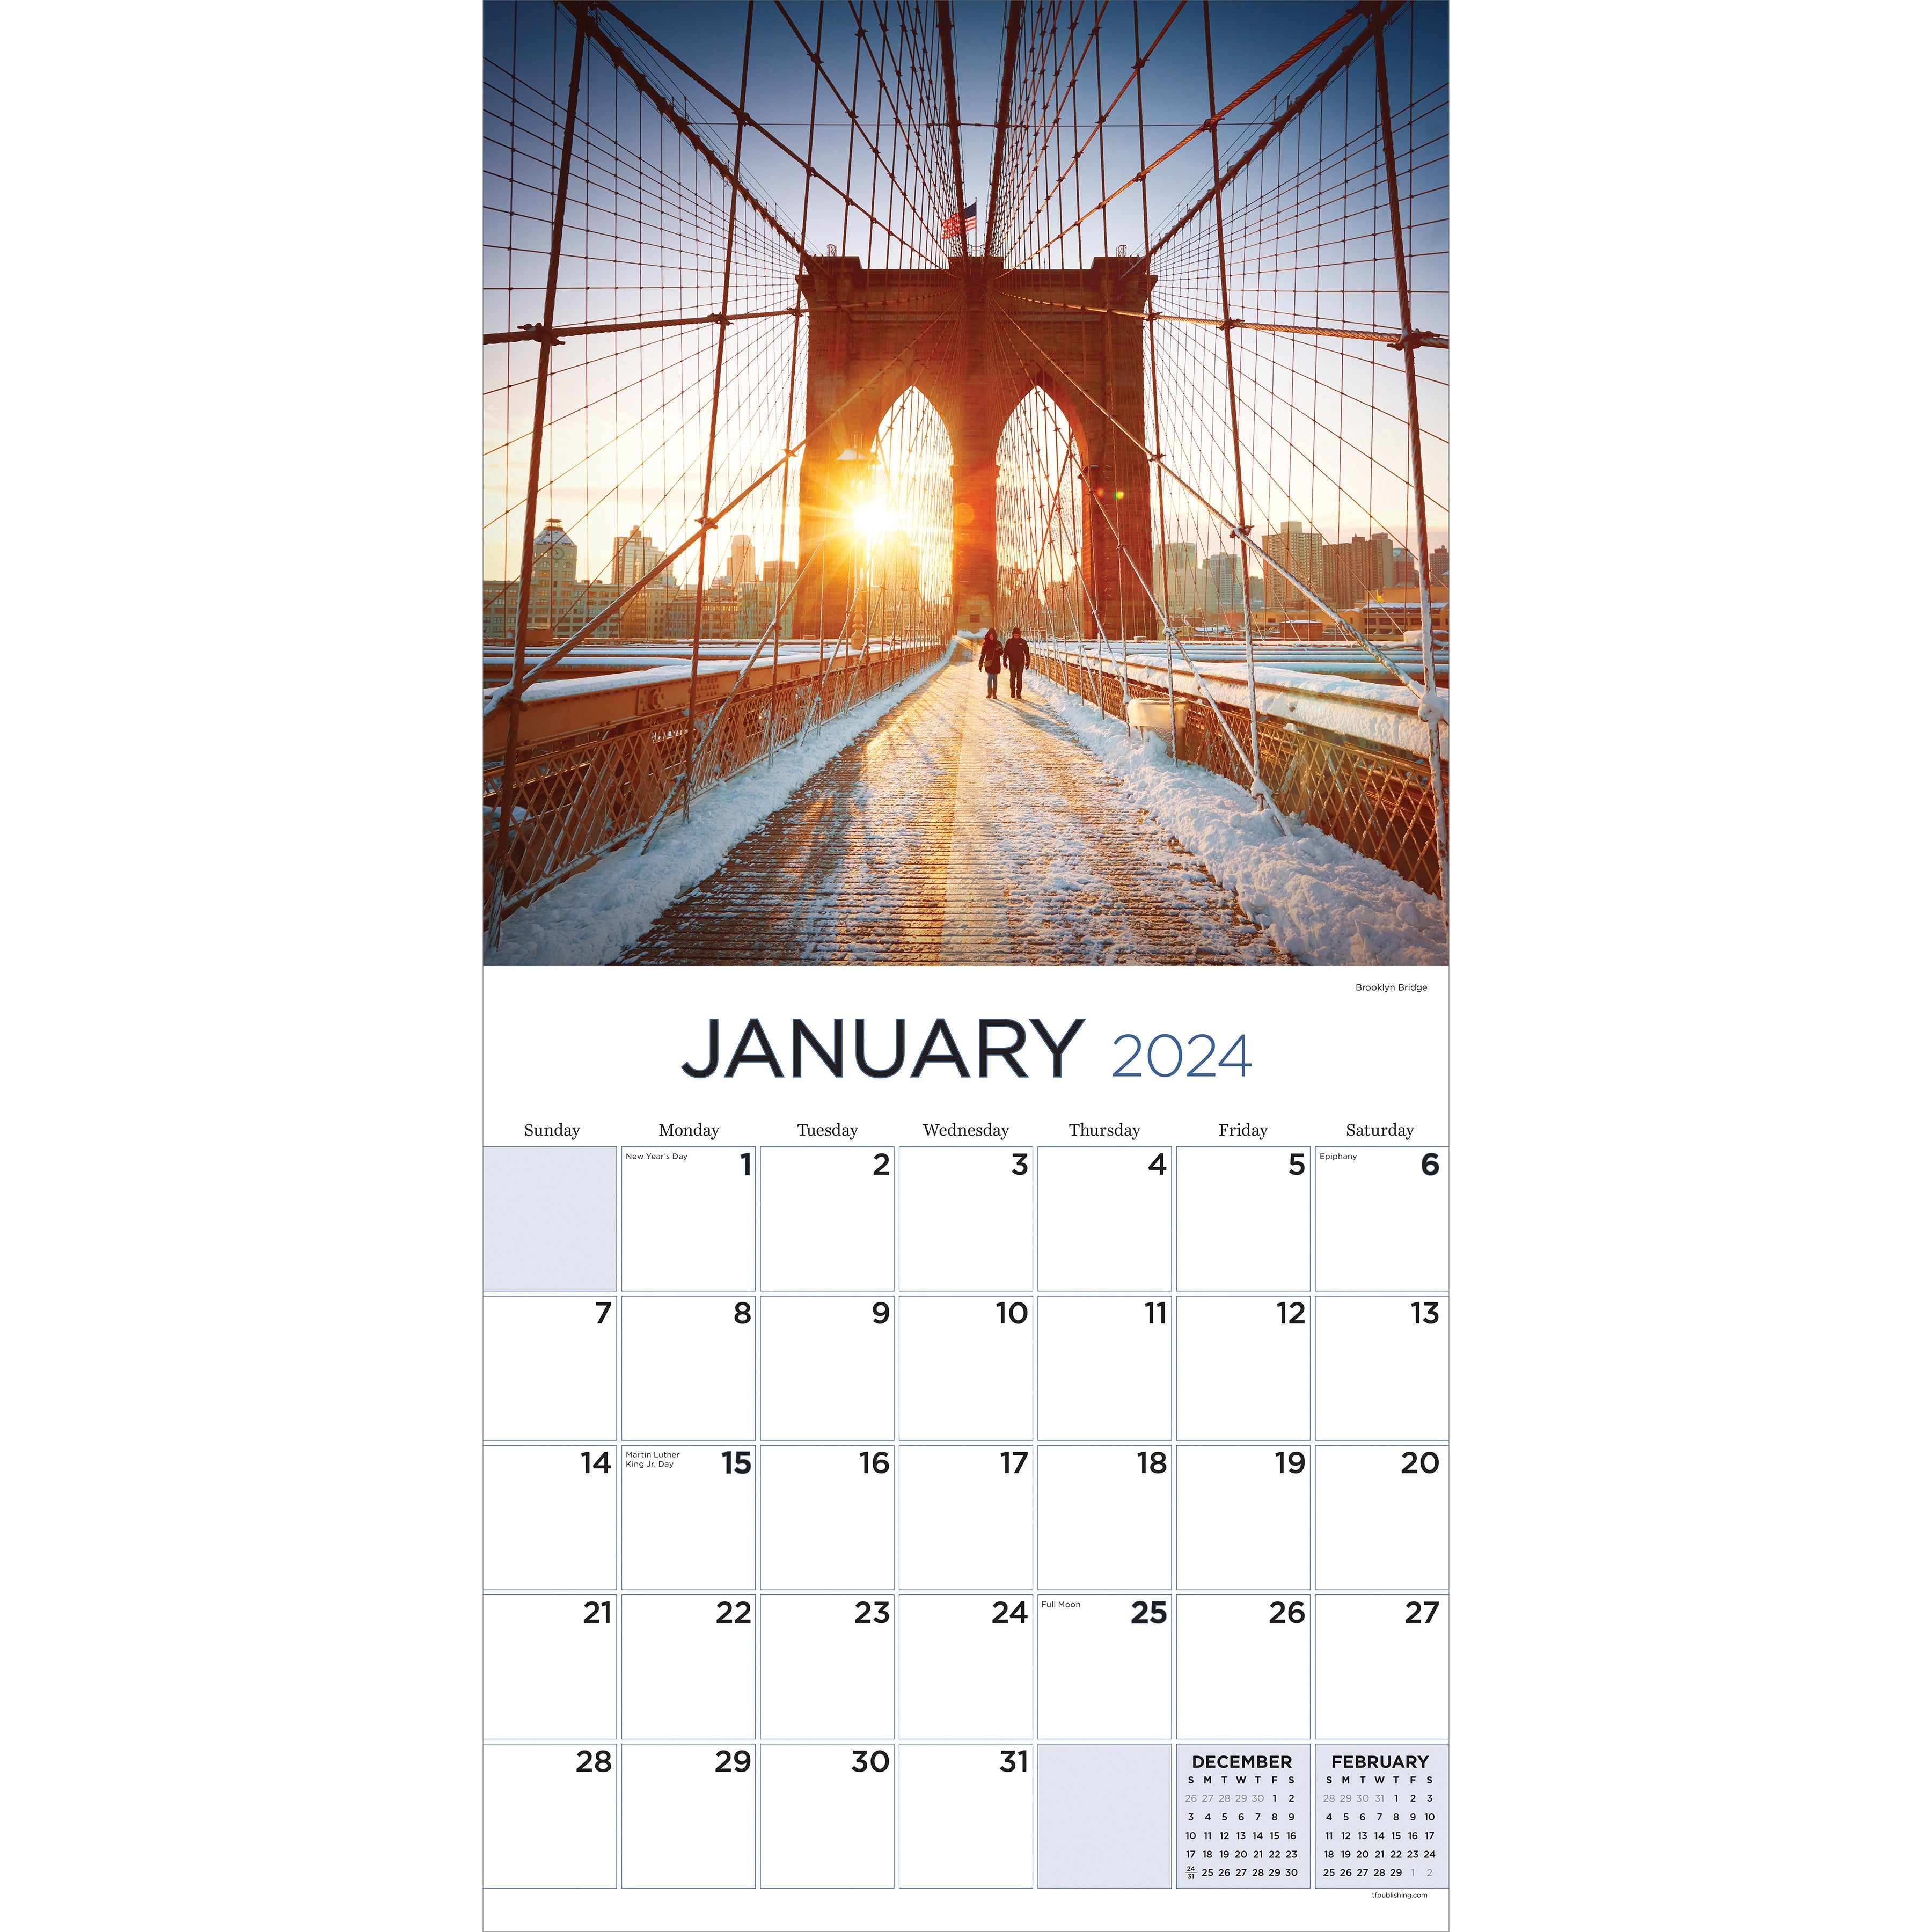 2024 NYC - Square Wall Calendar US